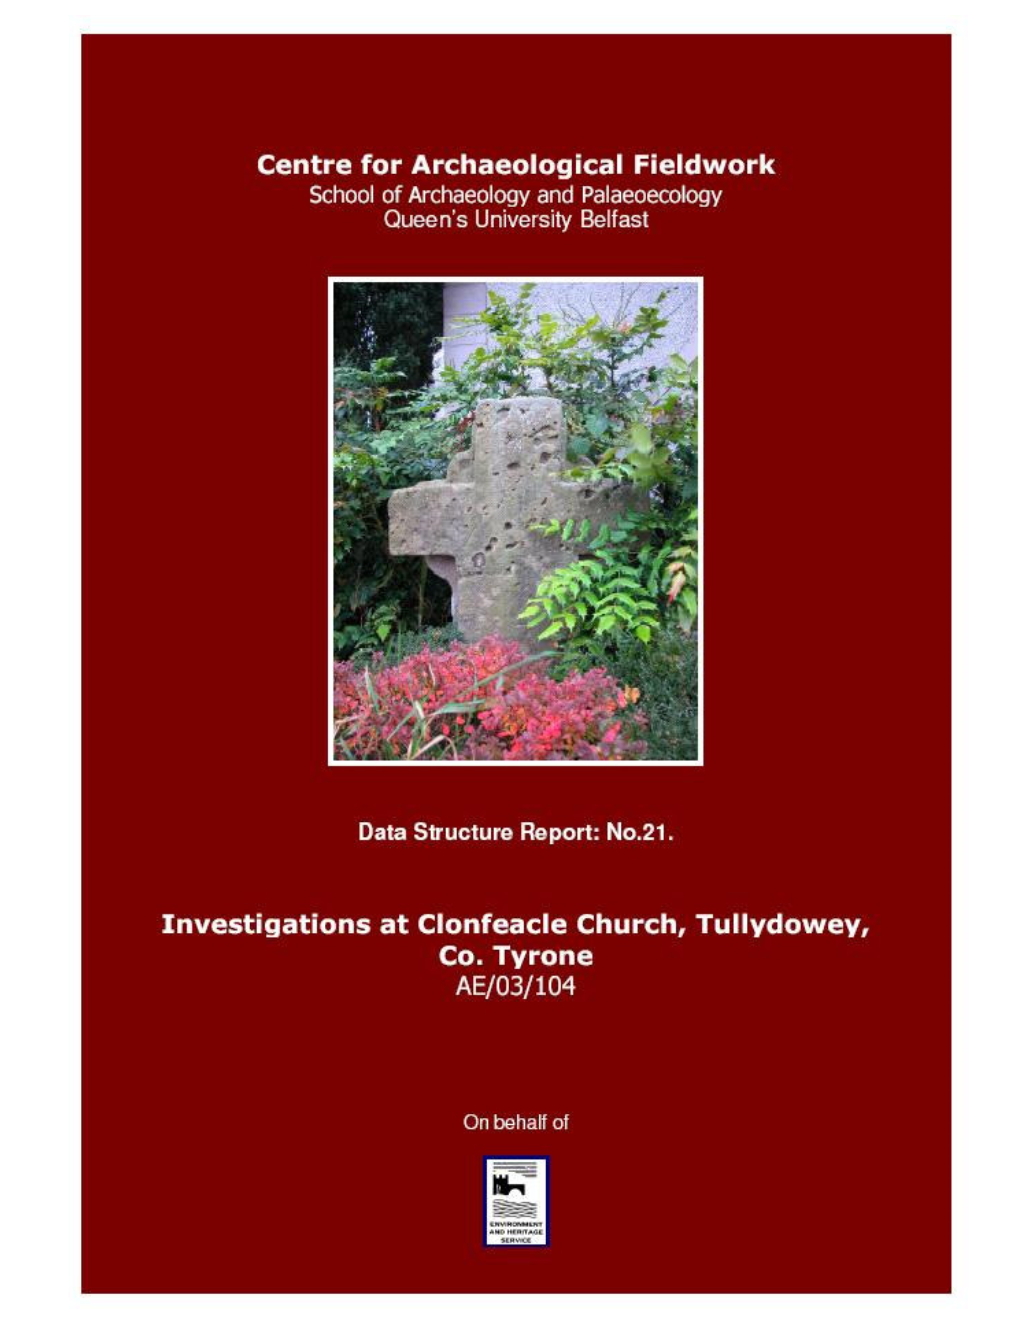 Clonfeacle Church, Tullydowey, Co. Tyrone 2003 (Licence No. AE/03/104) CAF DSR 021 ______